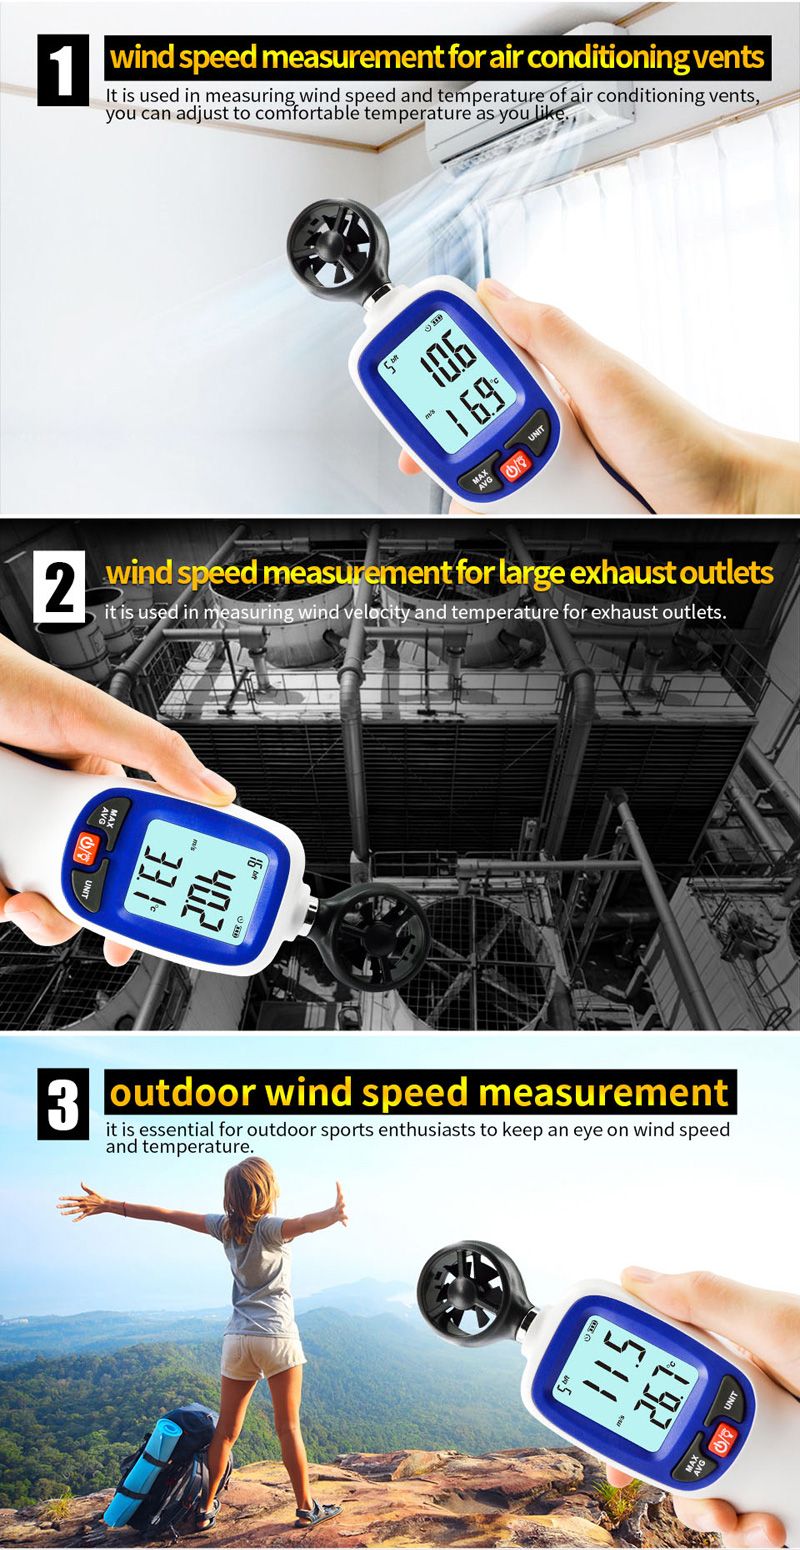 Wintact-WT82-WT82B-bluetooth-Digital-Anemometer-Mini-Wind-Speed-Meter-Wind-Meter-Temperature-Measure-1242496